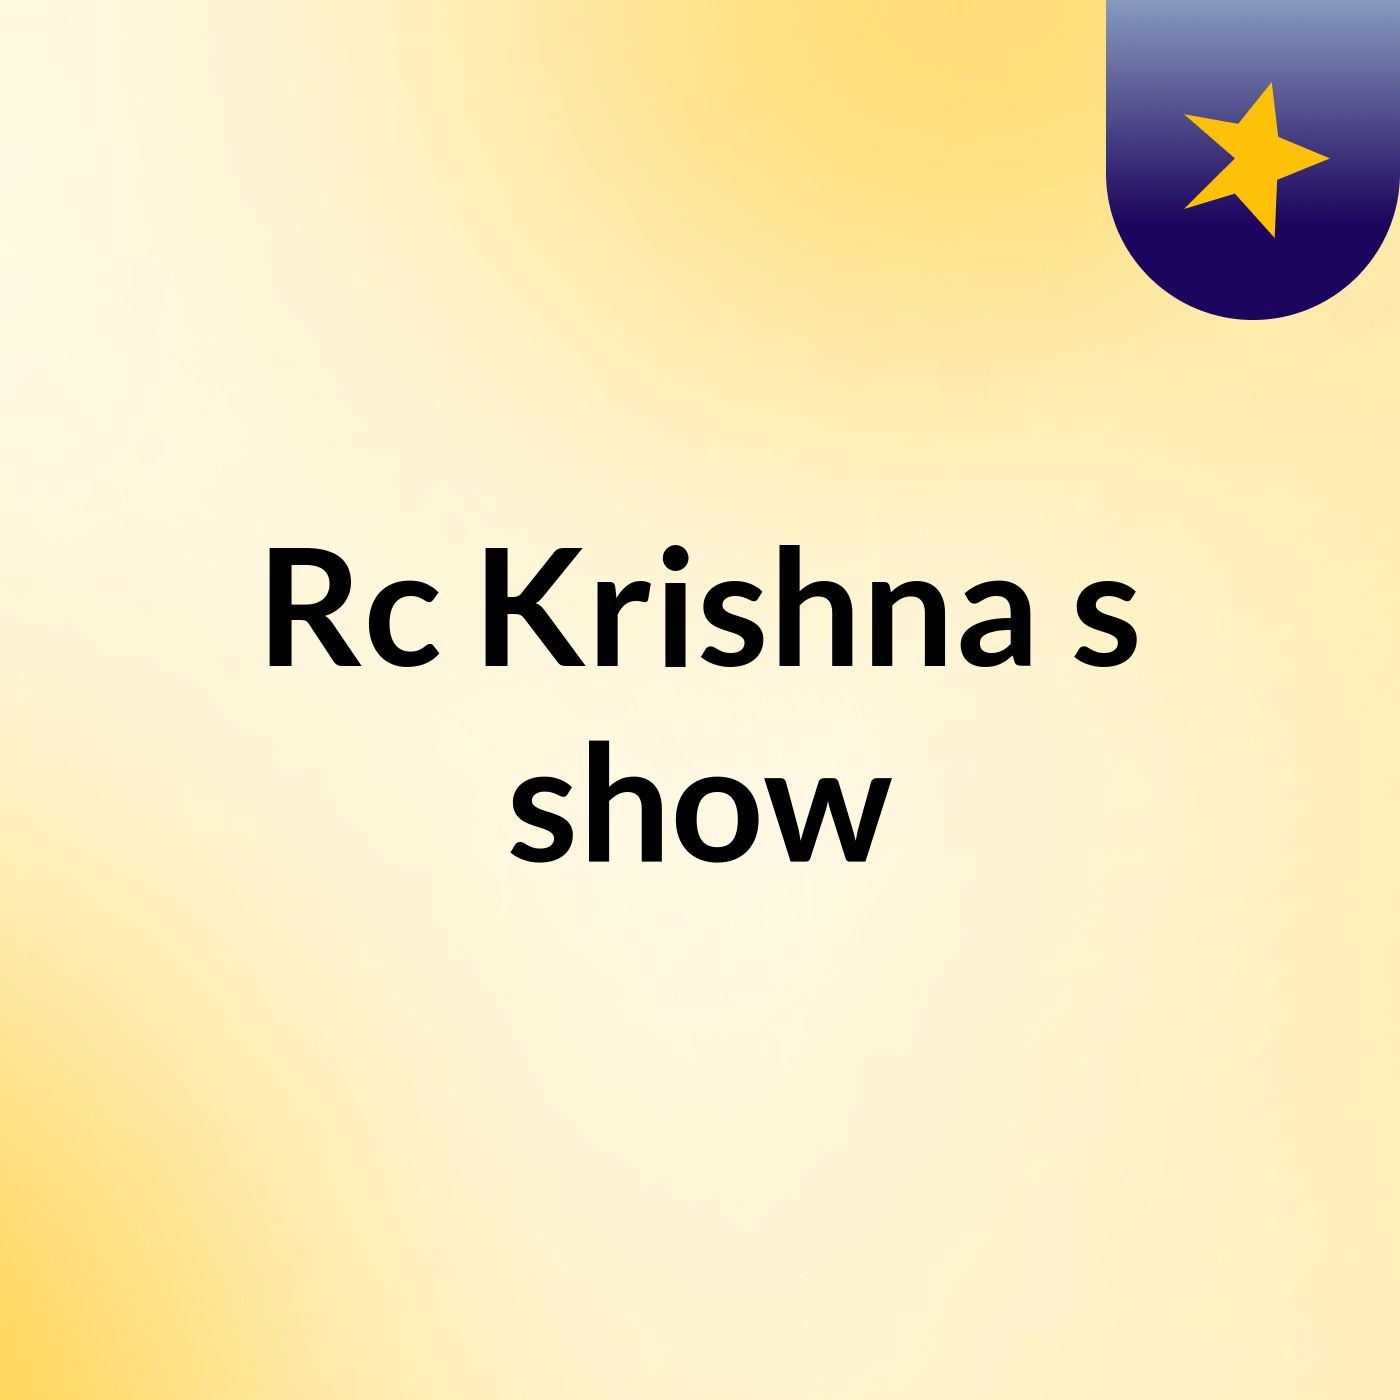 Episode 22 - Rc Krishna's show